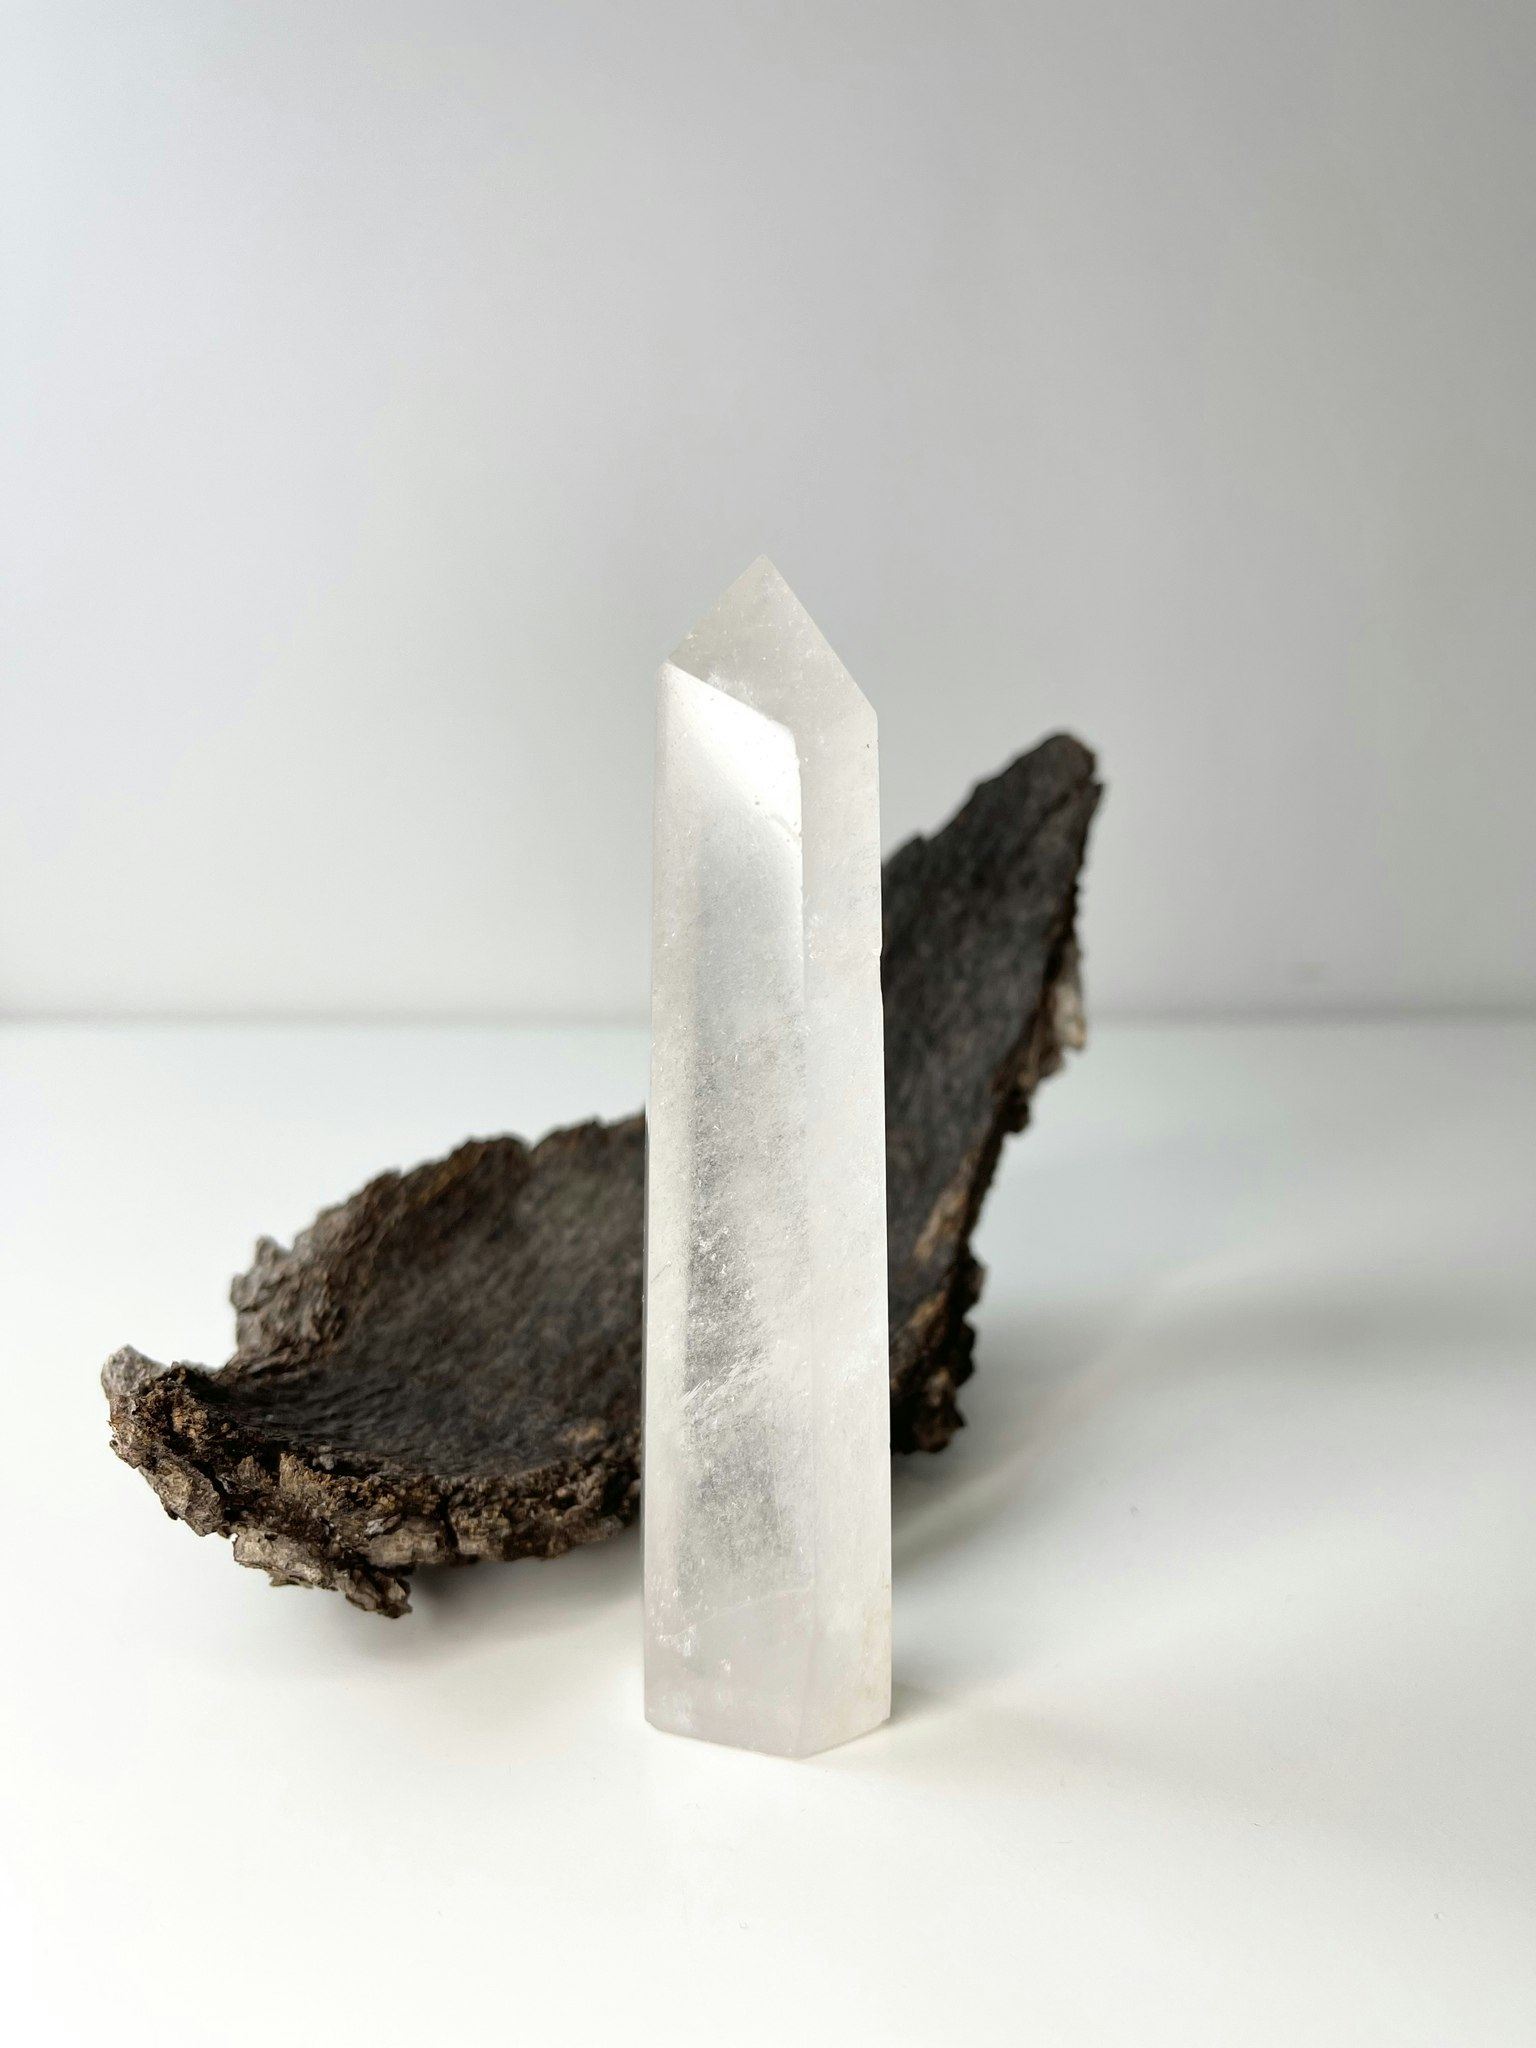 Bergkristall #A, clear quartz, polerad kristallspets